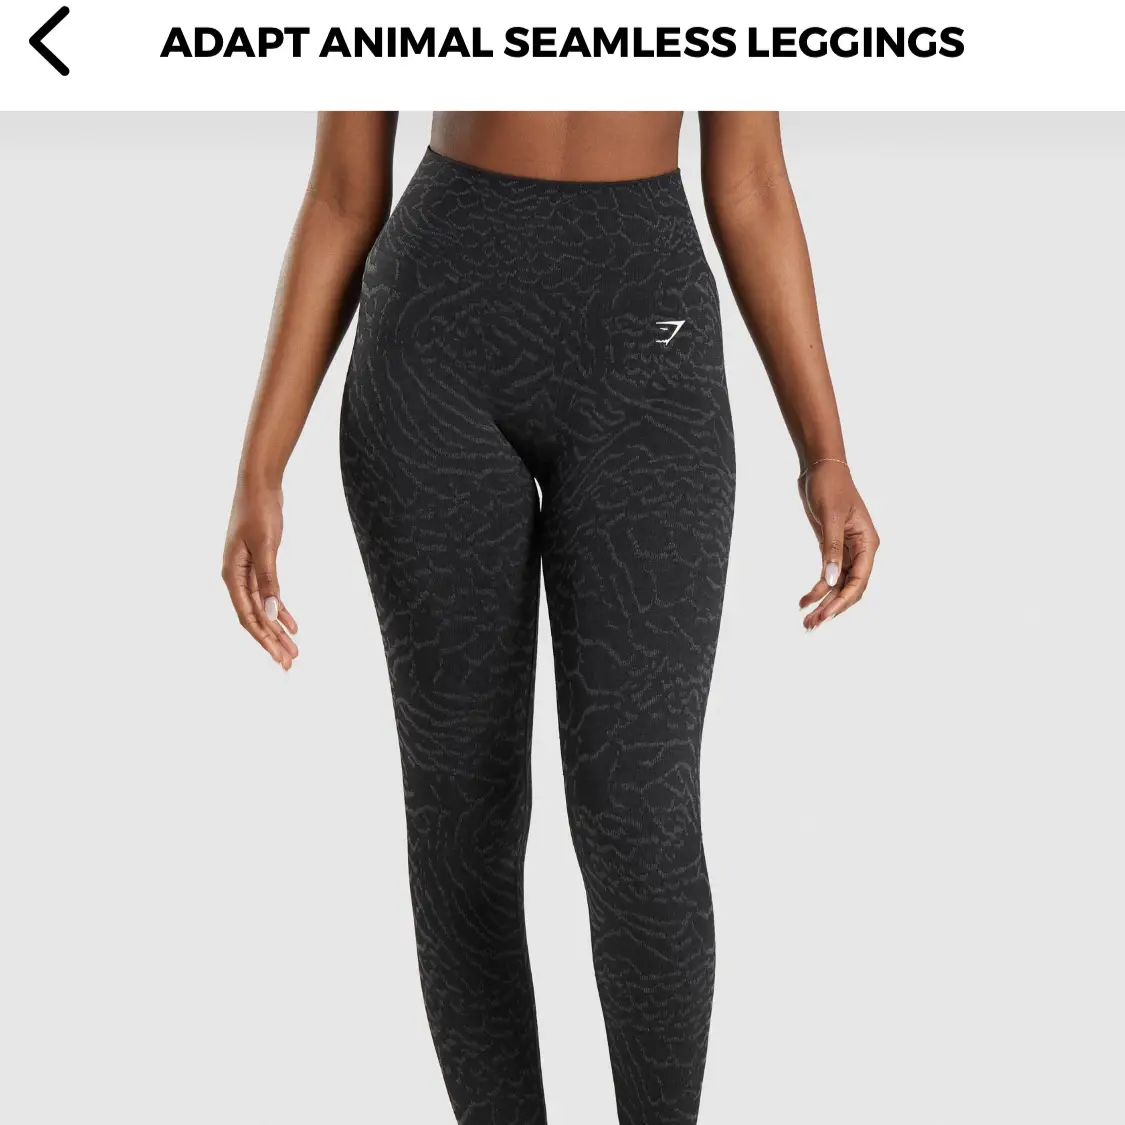 Adapt animal seamless leggings - Lemon8 Search